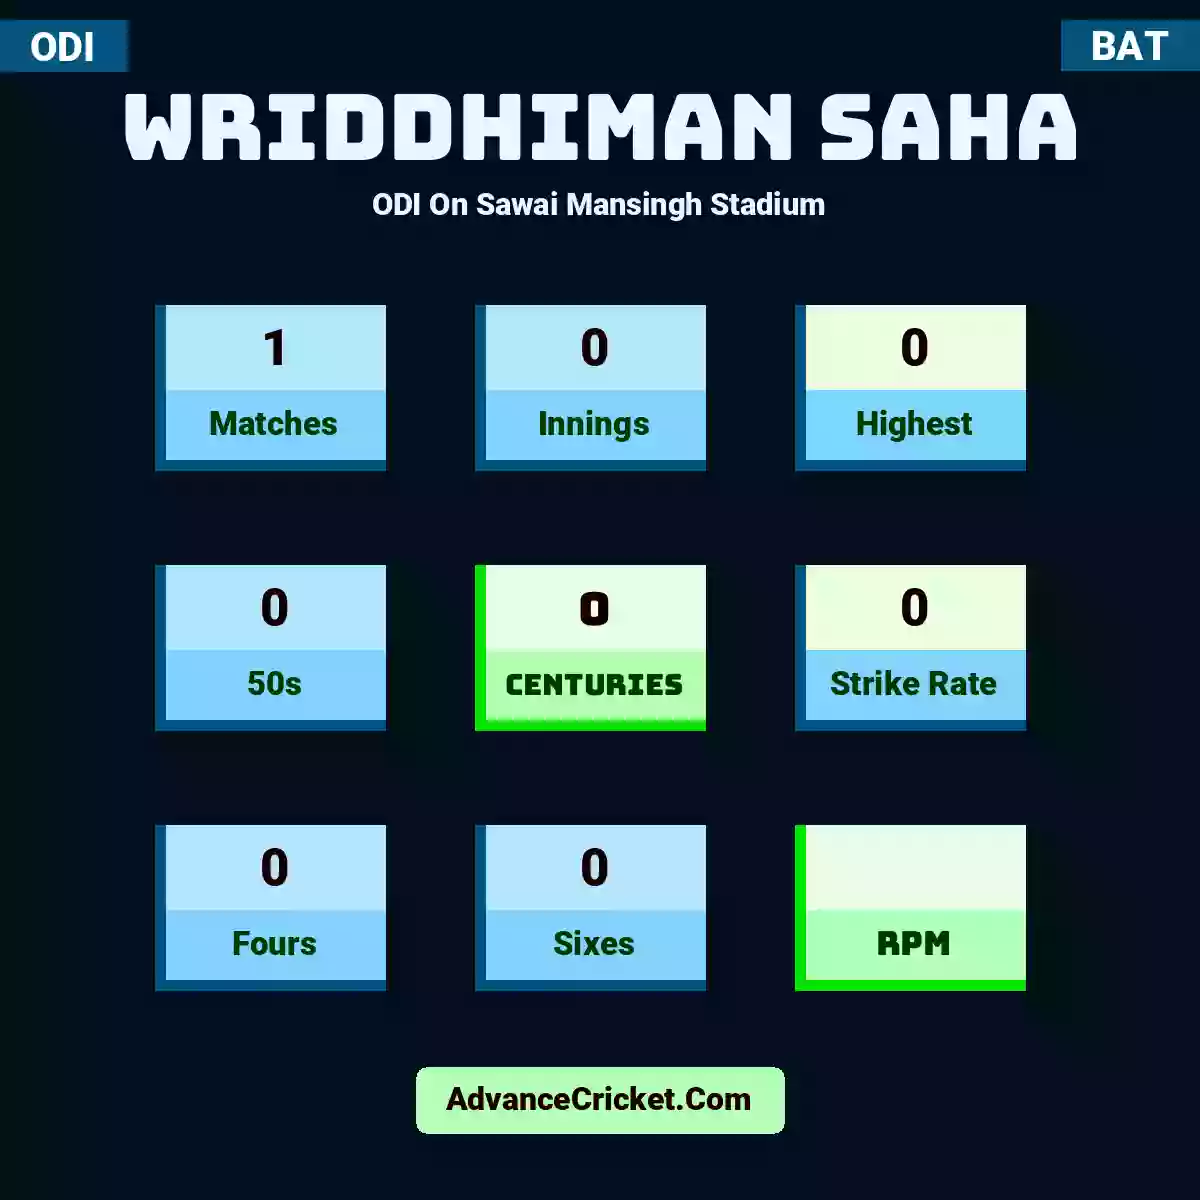 Wriddhiman Saha ODI  On Sawai Mansingh Stadium, Wriddhiman Saha played 1 matches, scored 0 runs as highest, 0 half-centuries, and 0 centuries, with a strike rate of 0. W.Saha hit 0 fours and 0 sixes.